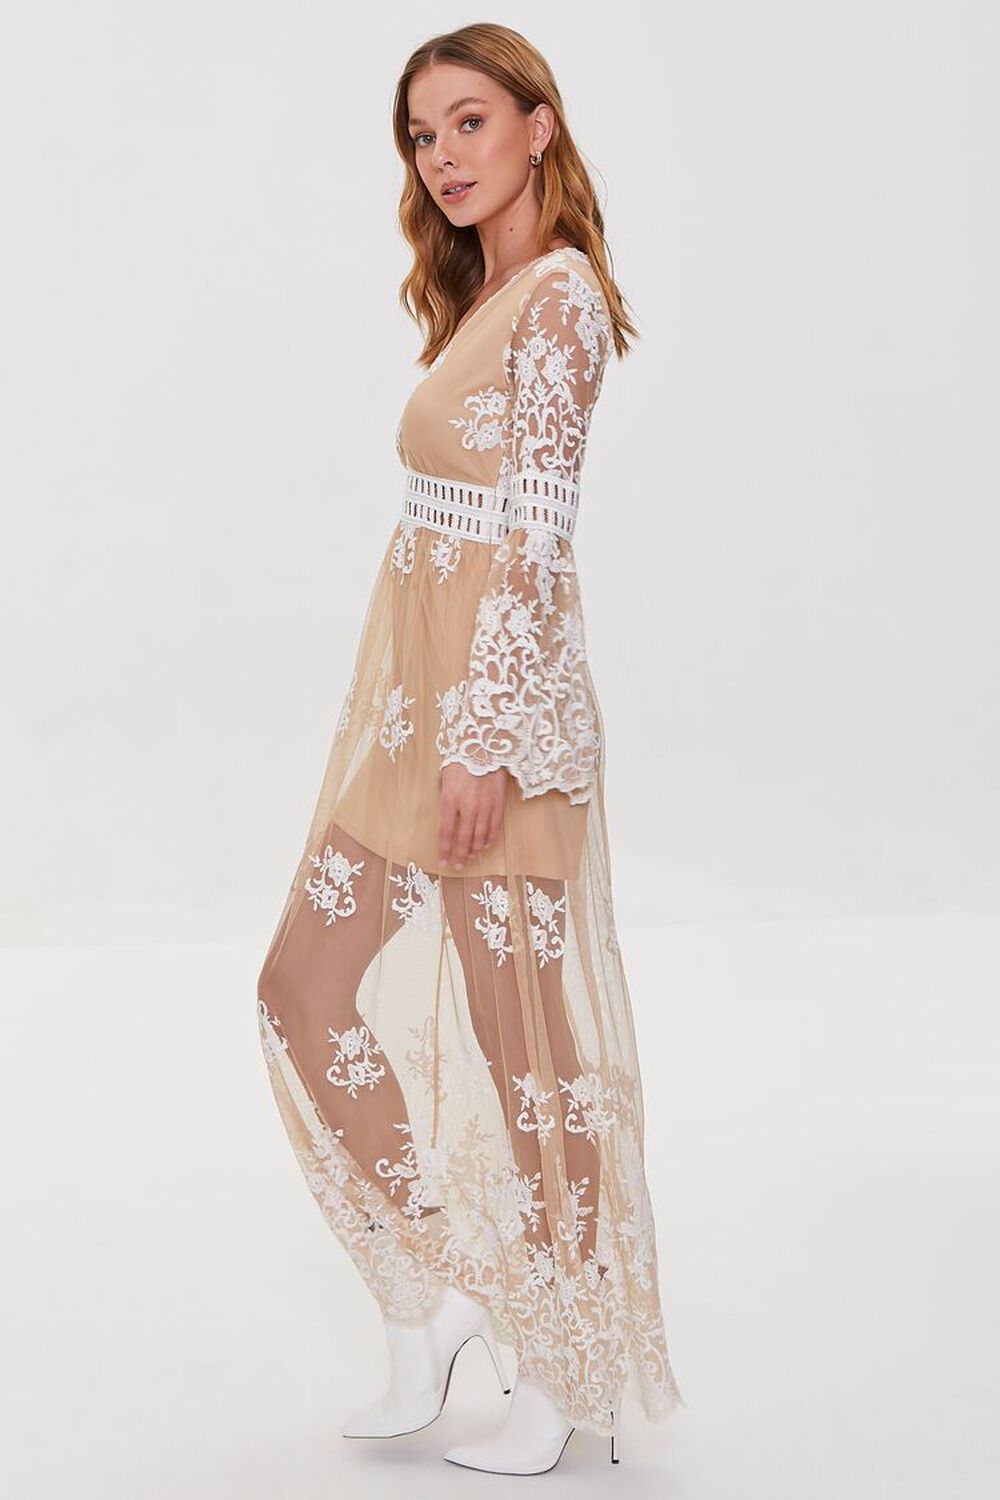 WHITE/NUDE Crochet Lace Maxi Dress, image 2